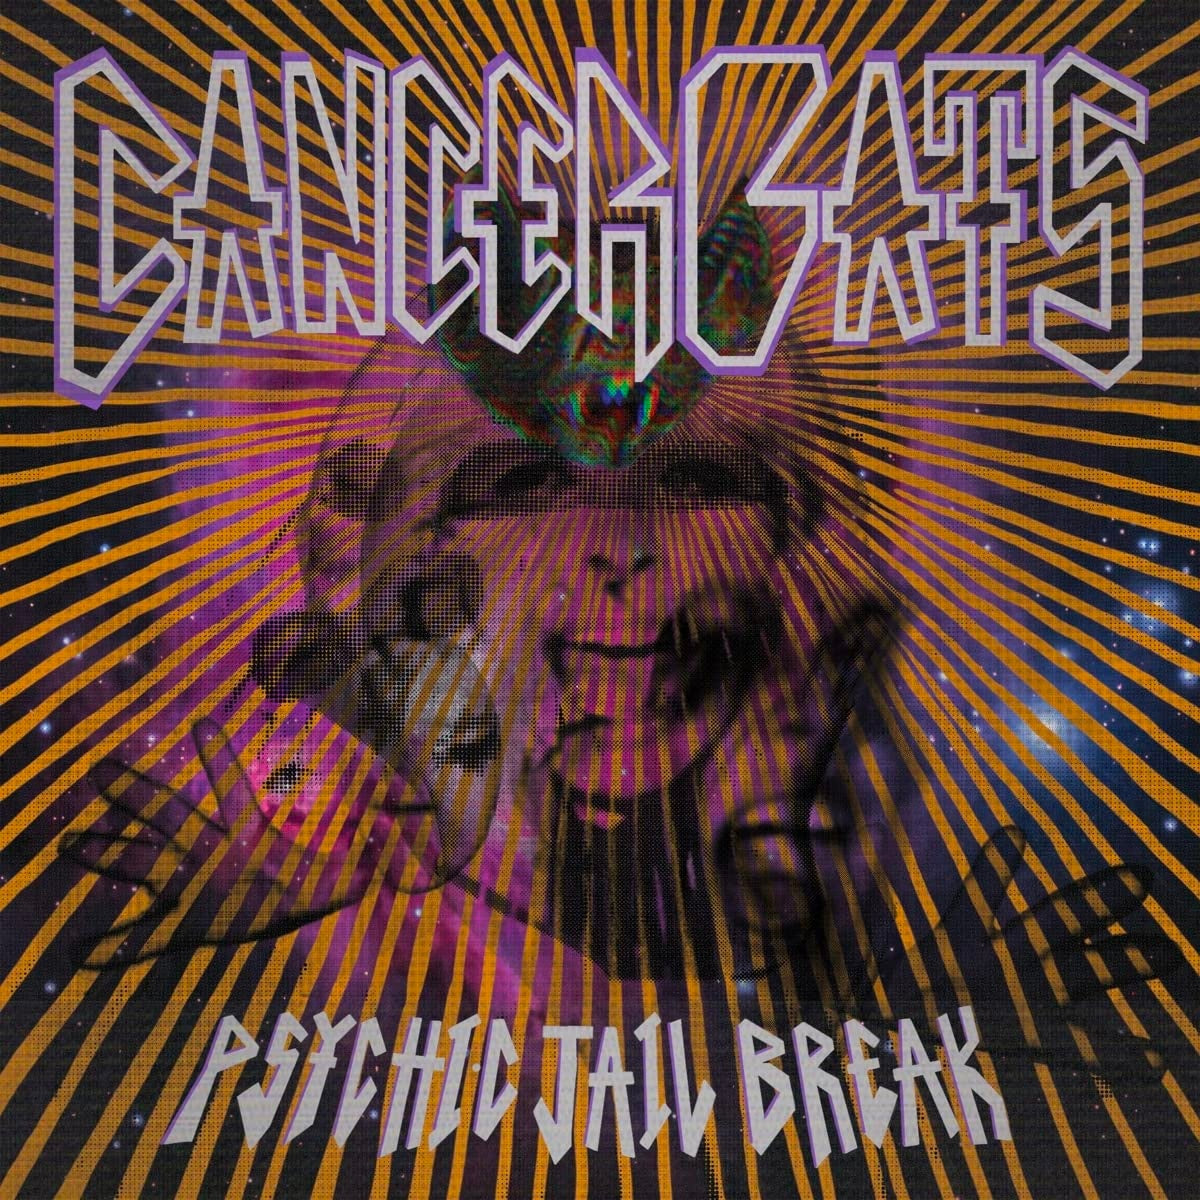 CANCER BATS • Psychic Jailbreak (several coloured vinyl options) • LP